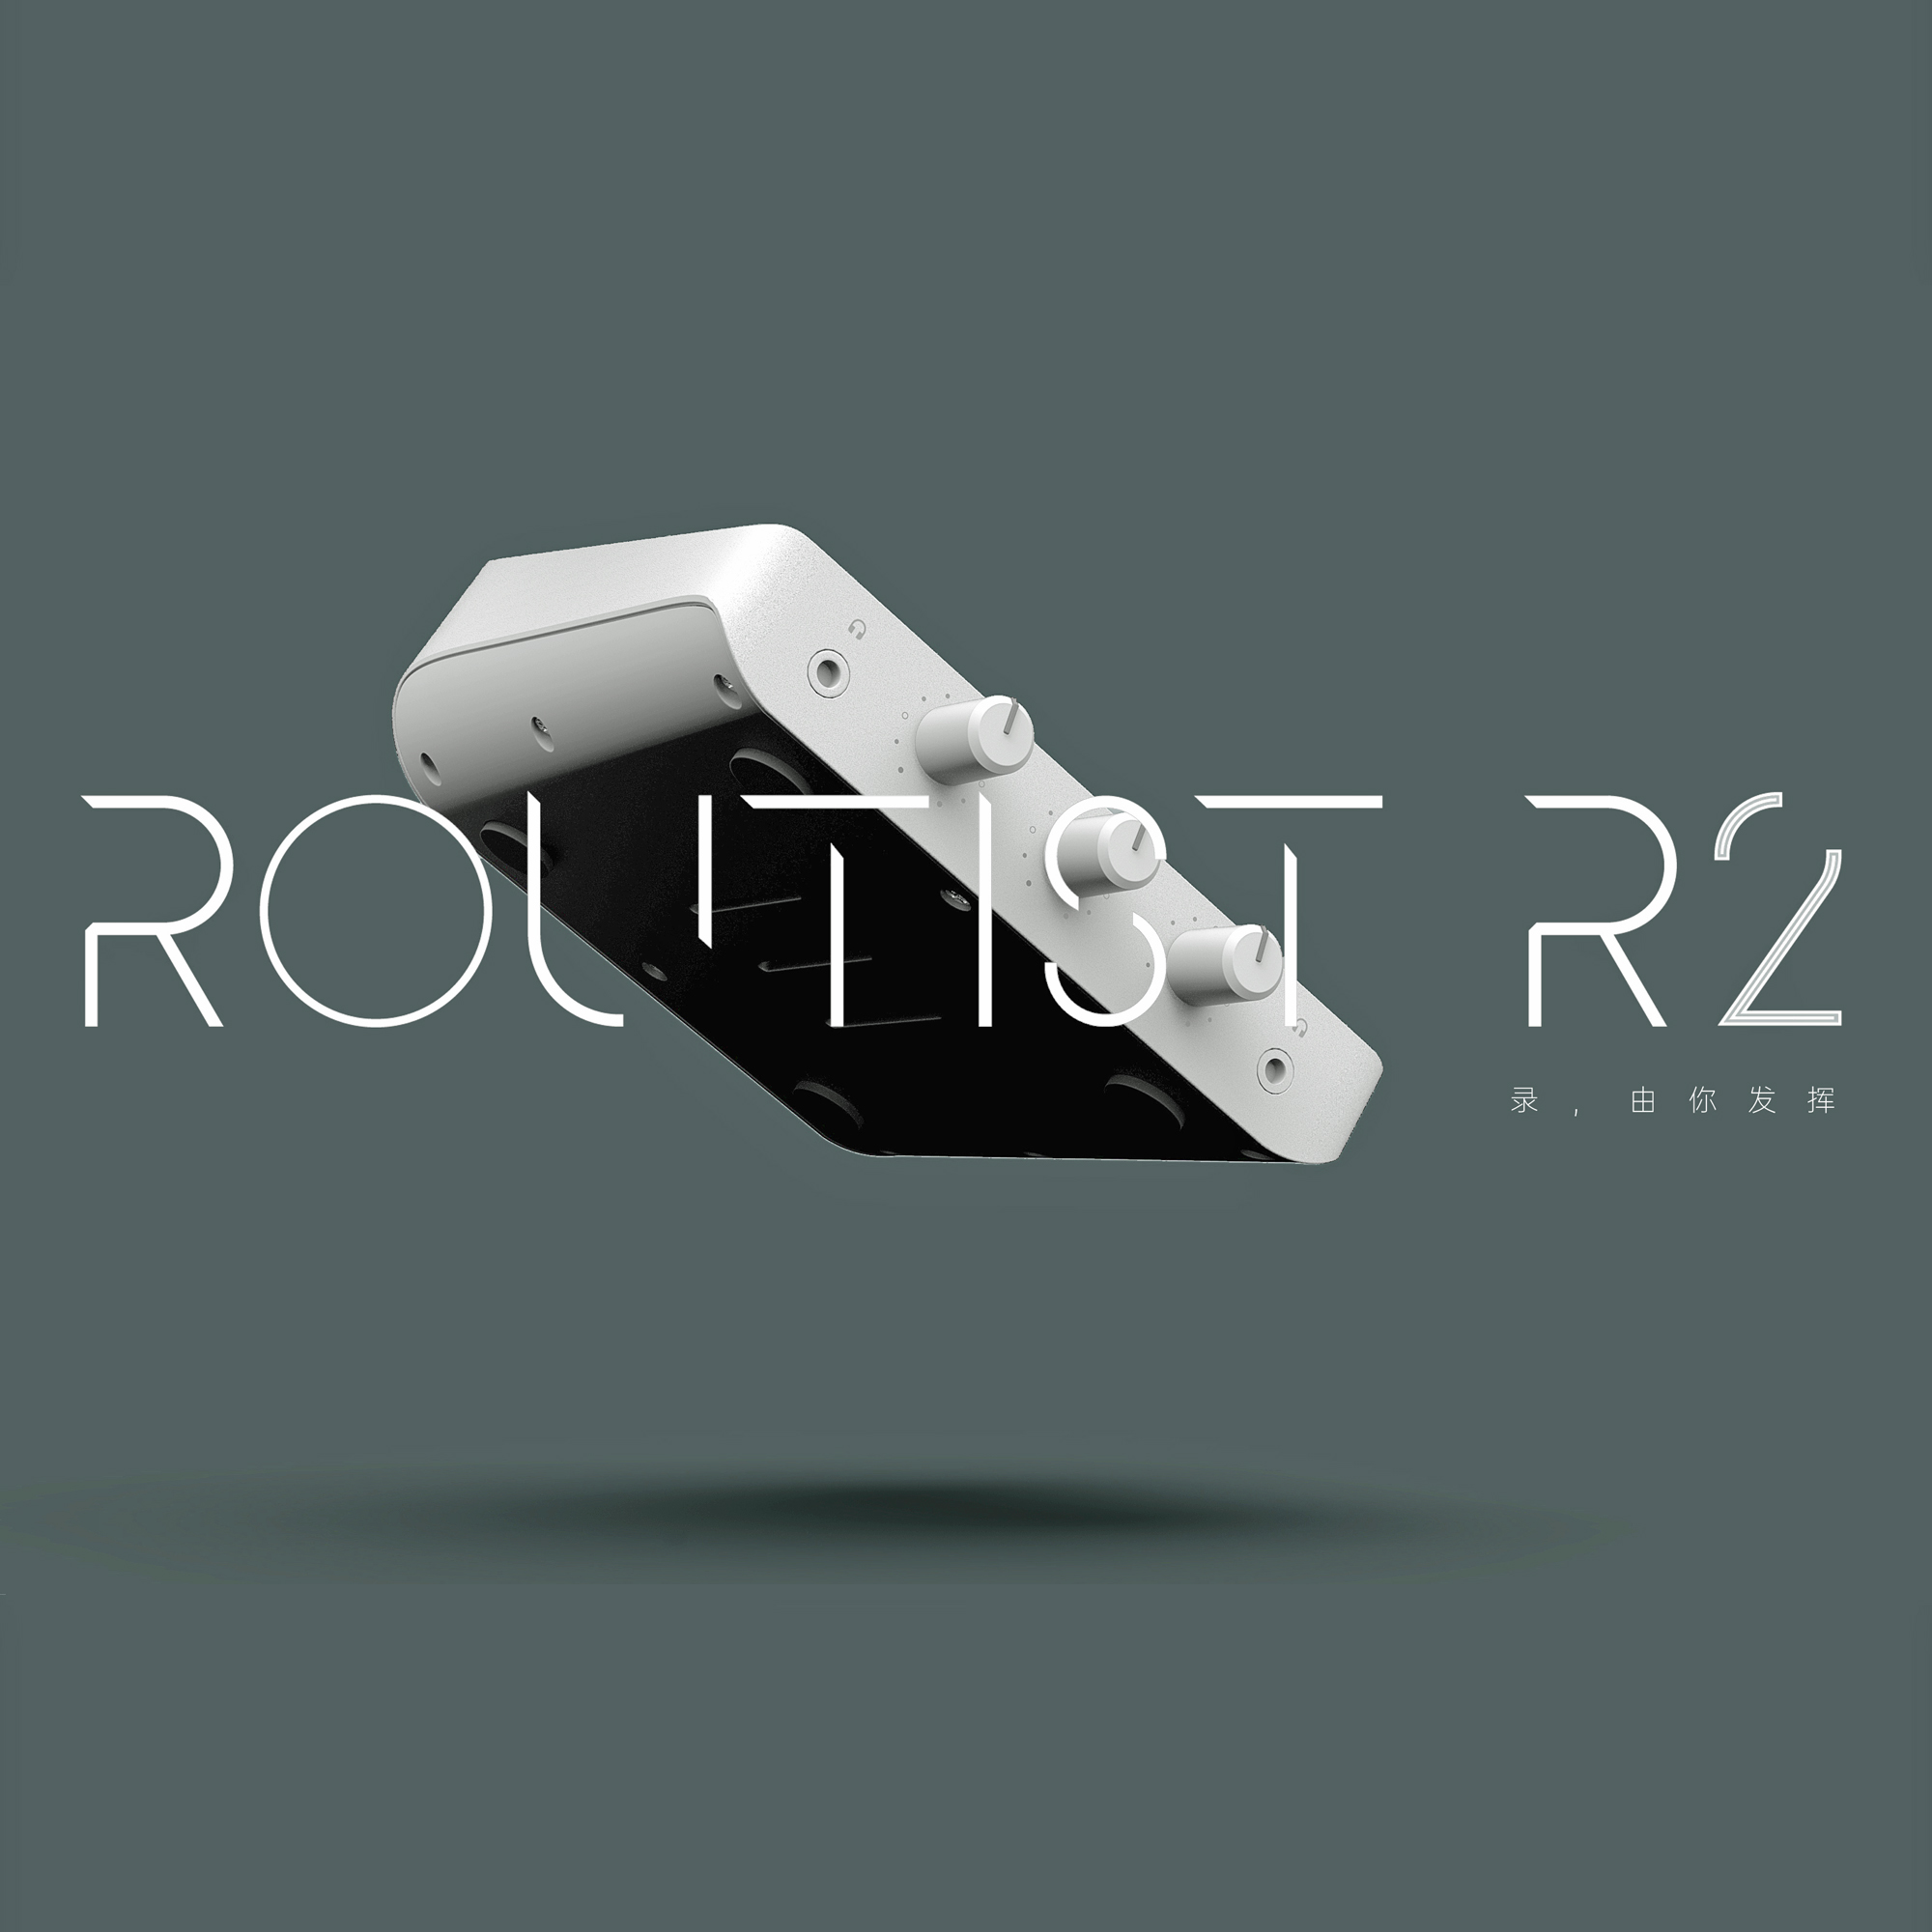 Routist R2 - Image 5.jpg